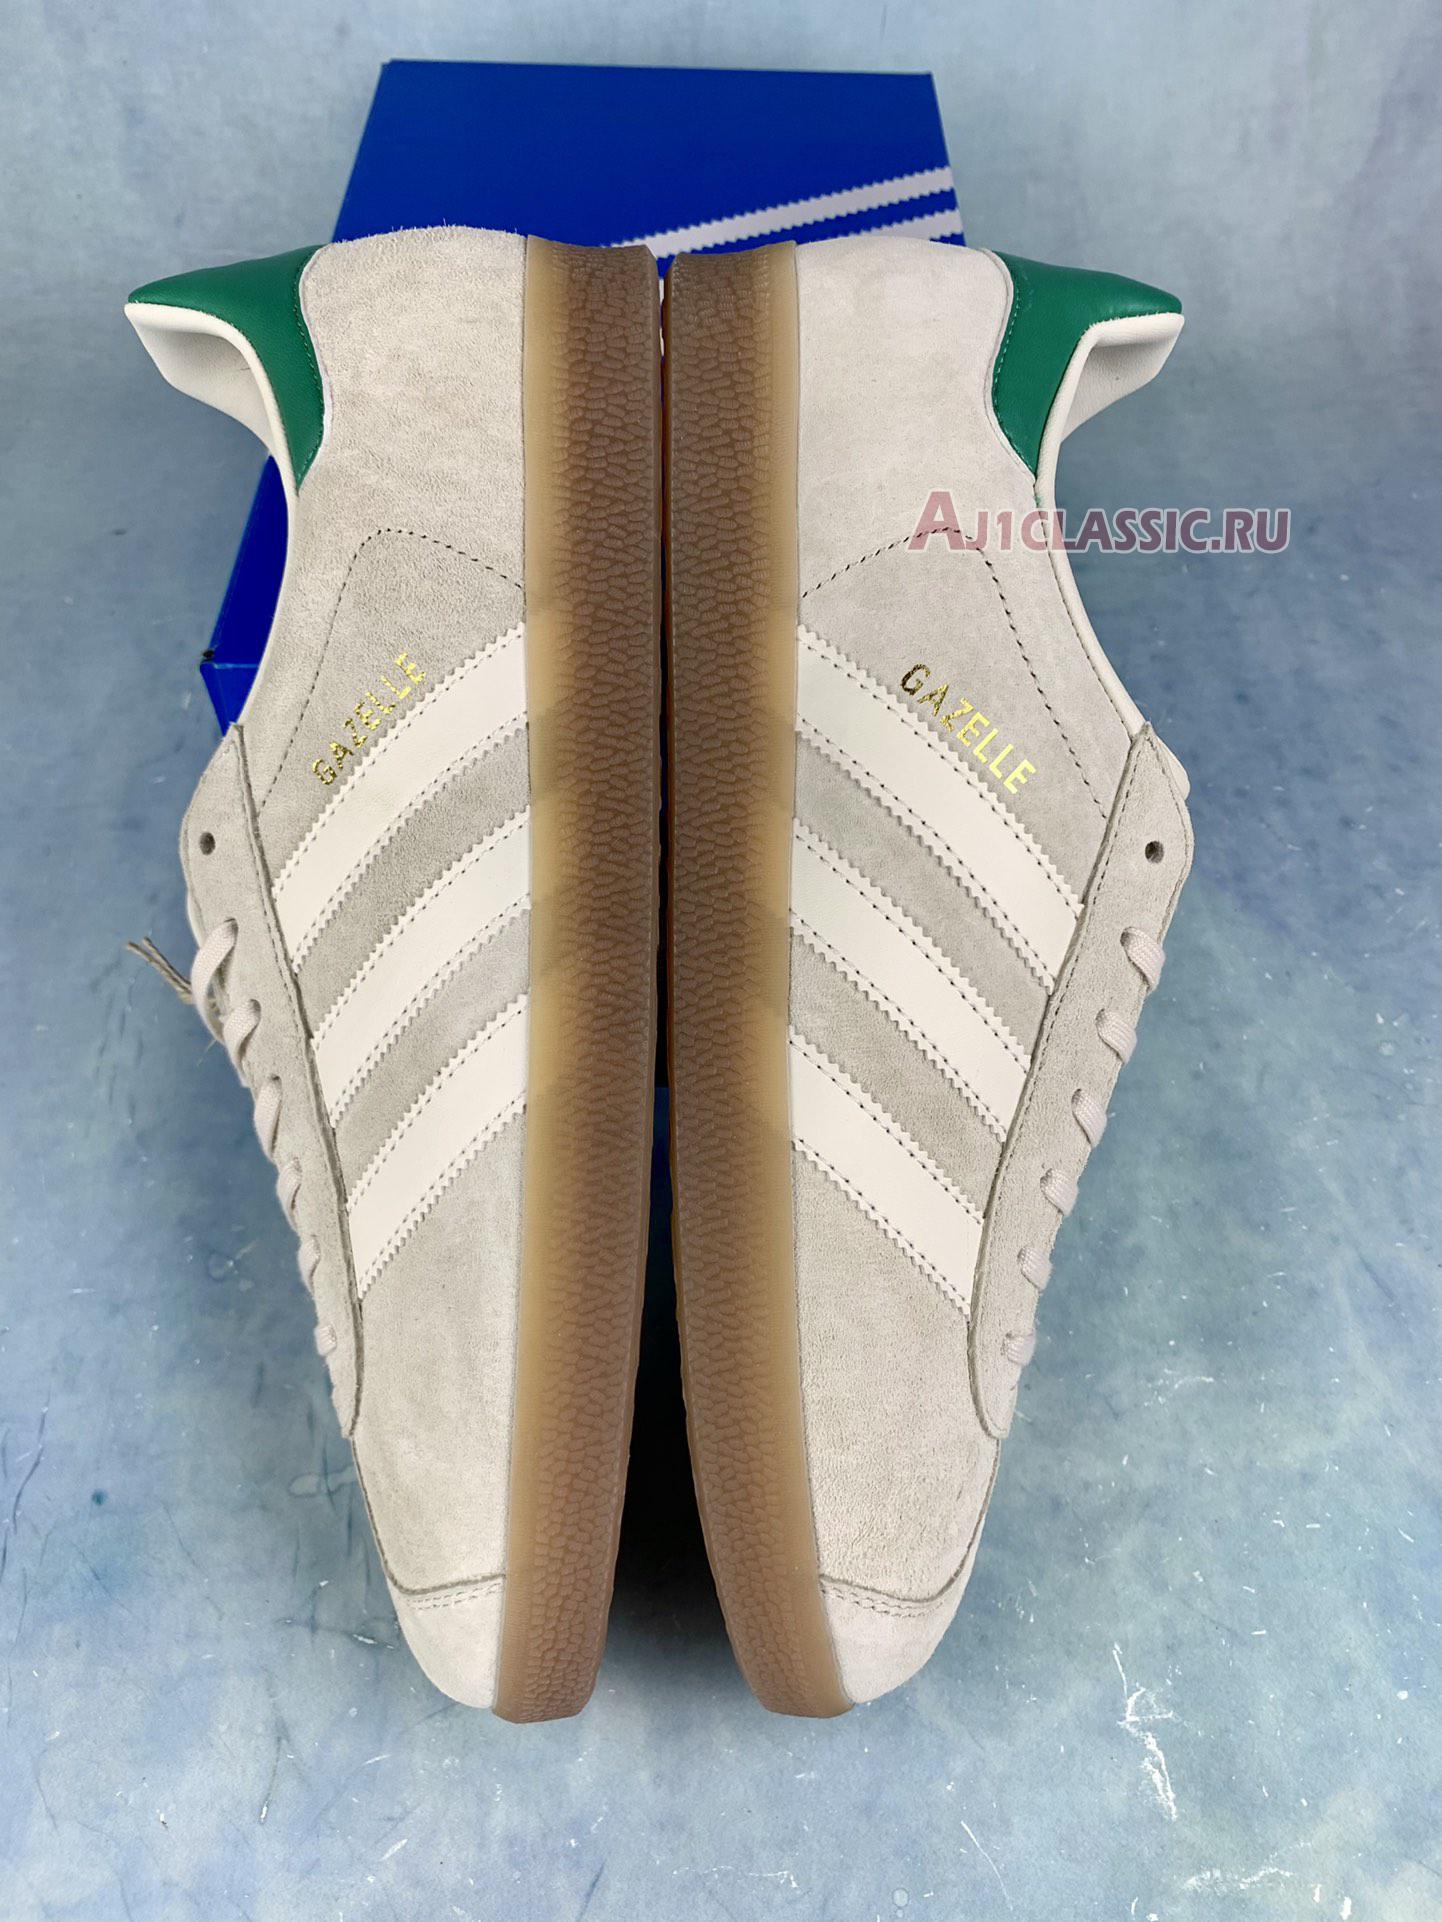 Adidas Gazelle "Wonder White Green" IF3235